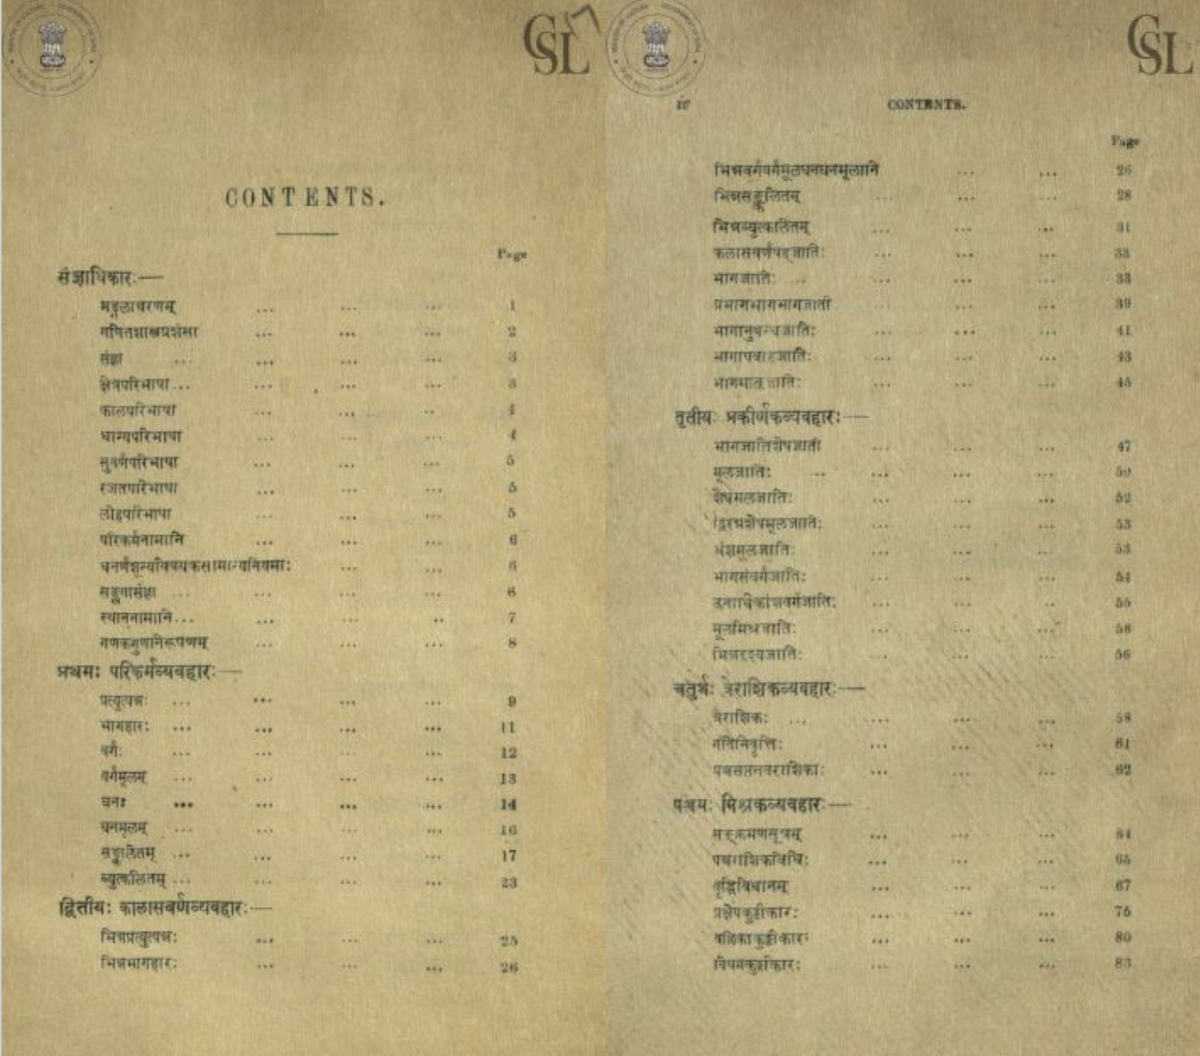 Sanskrit table of contents for 1912 translation of Mahavira's Ganita-sāra-sangraha.